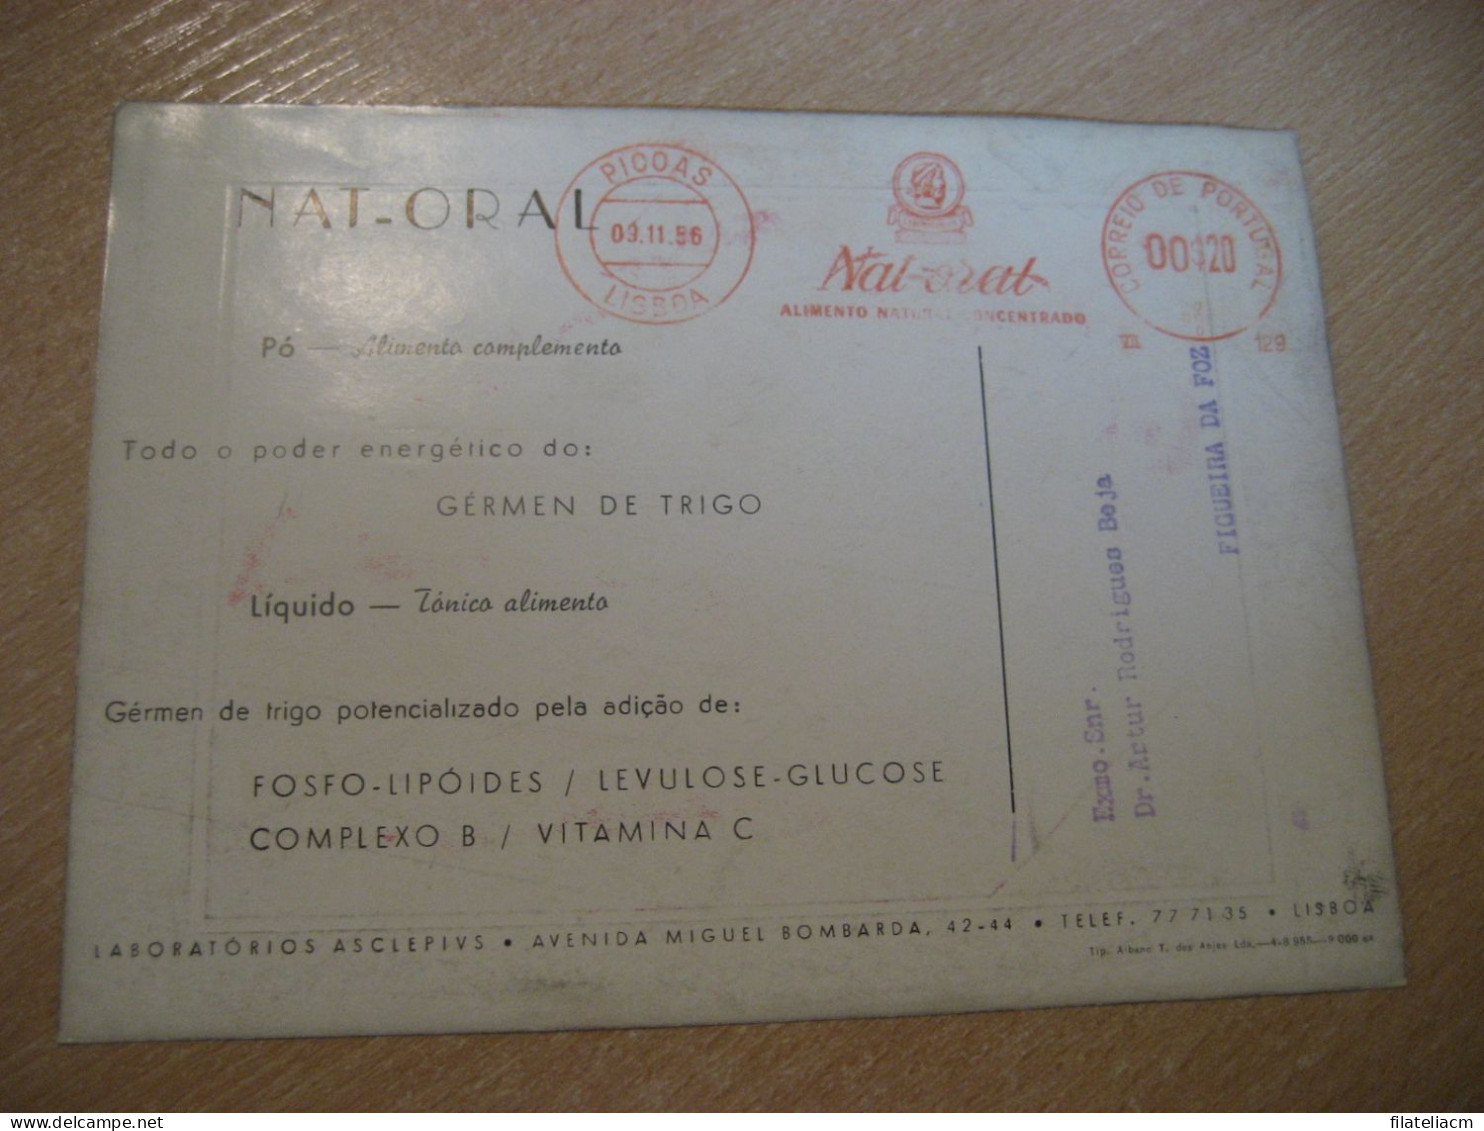 LISBOA 1956 To Figueira Da Foz Nat-Oral Germen De Trigo Pharmacy Health Chemical Meter Mail Cancel Card PORTUGAL - Covers & Documents